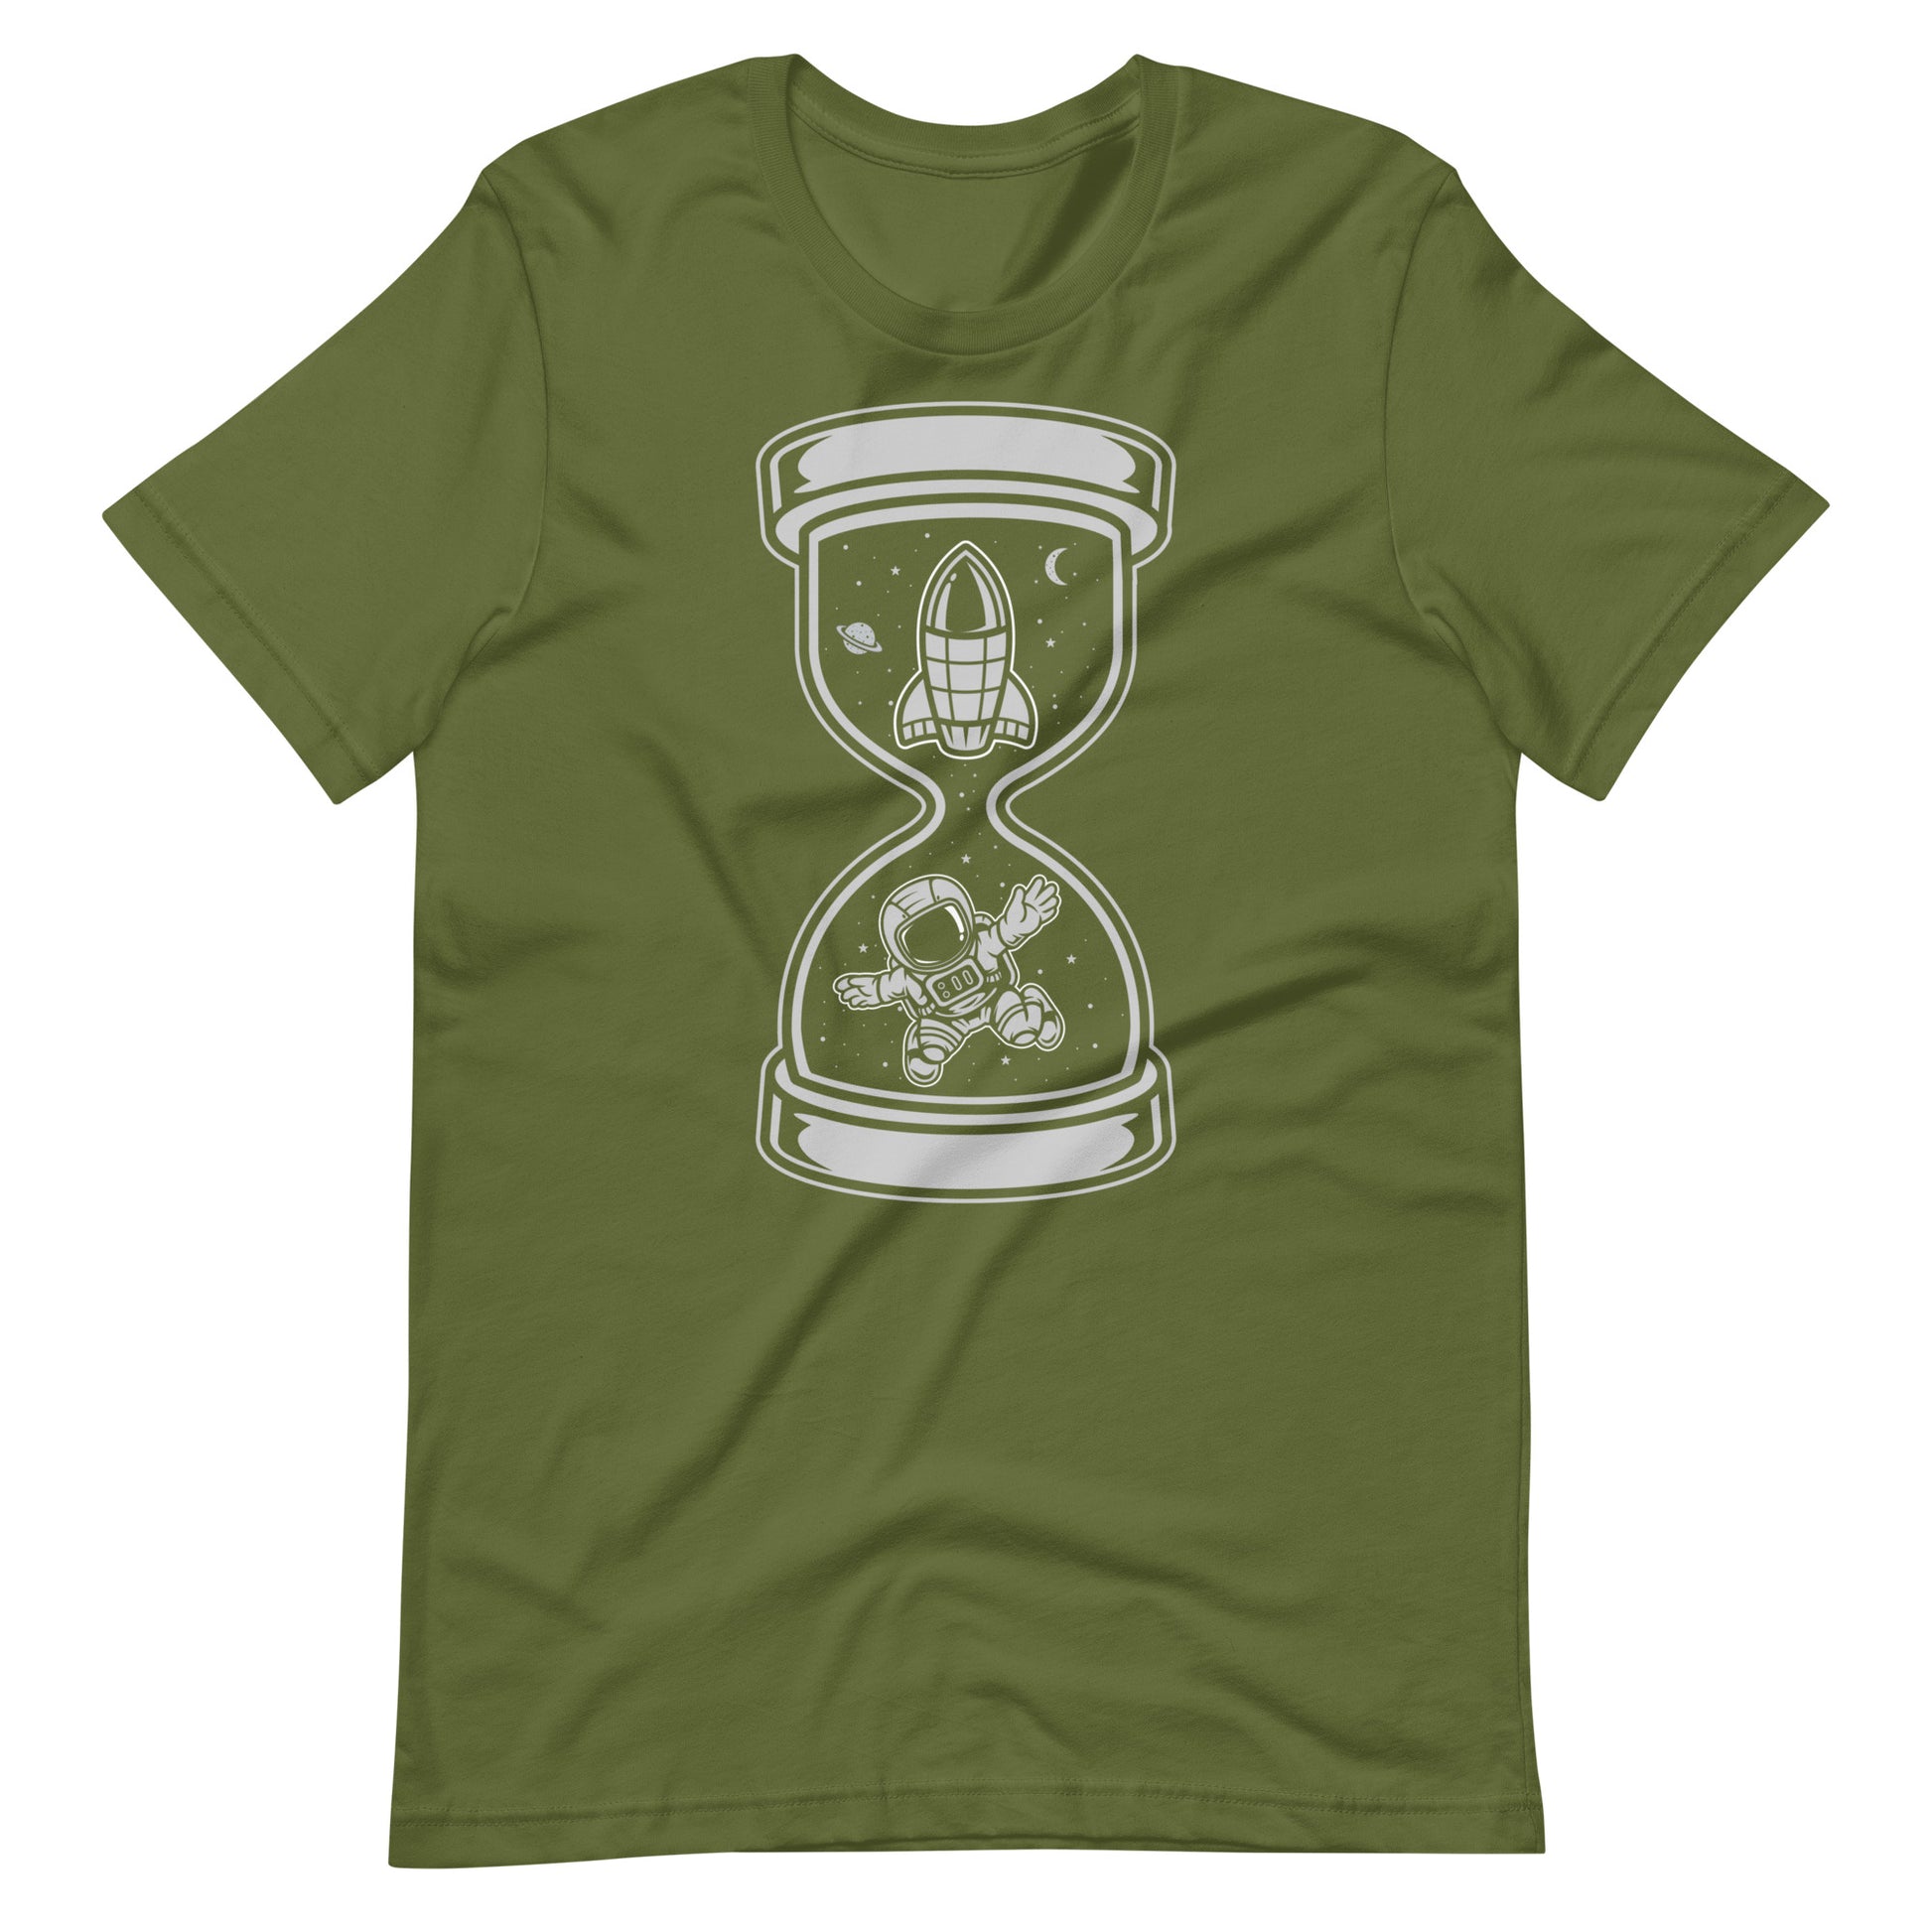 Astronaut Time - Men's t-shirt - Olive Front